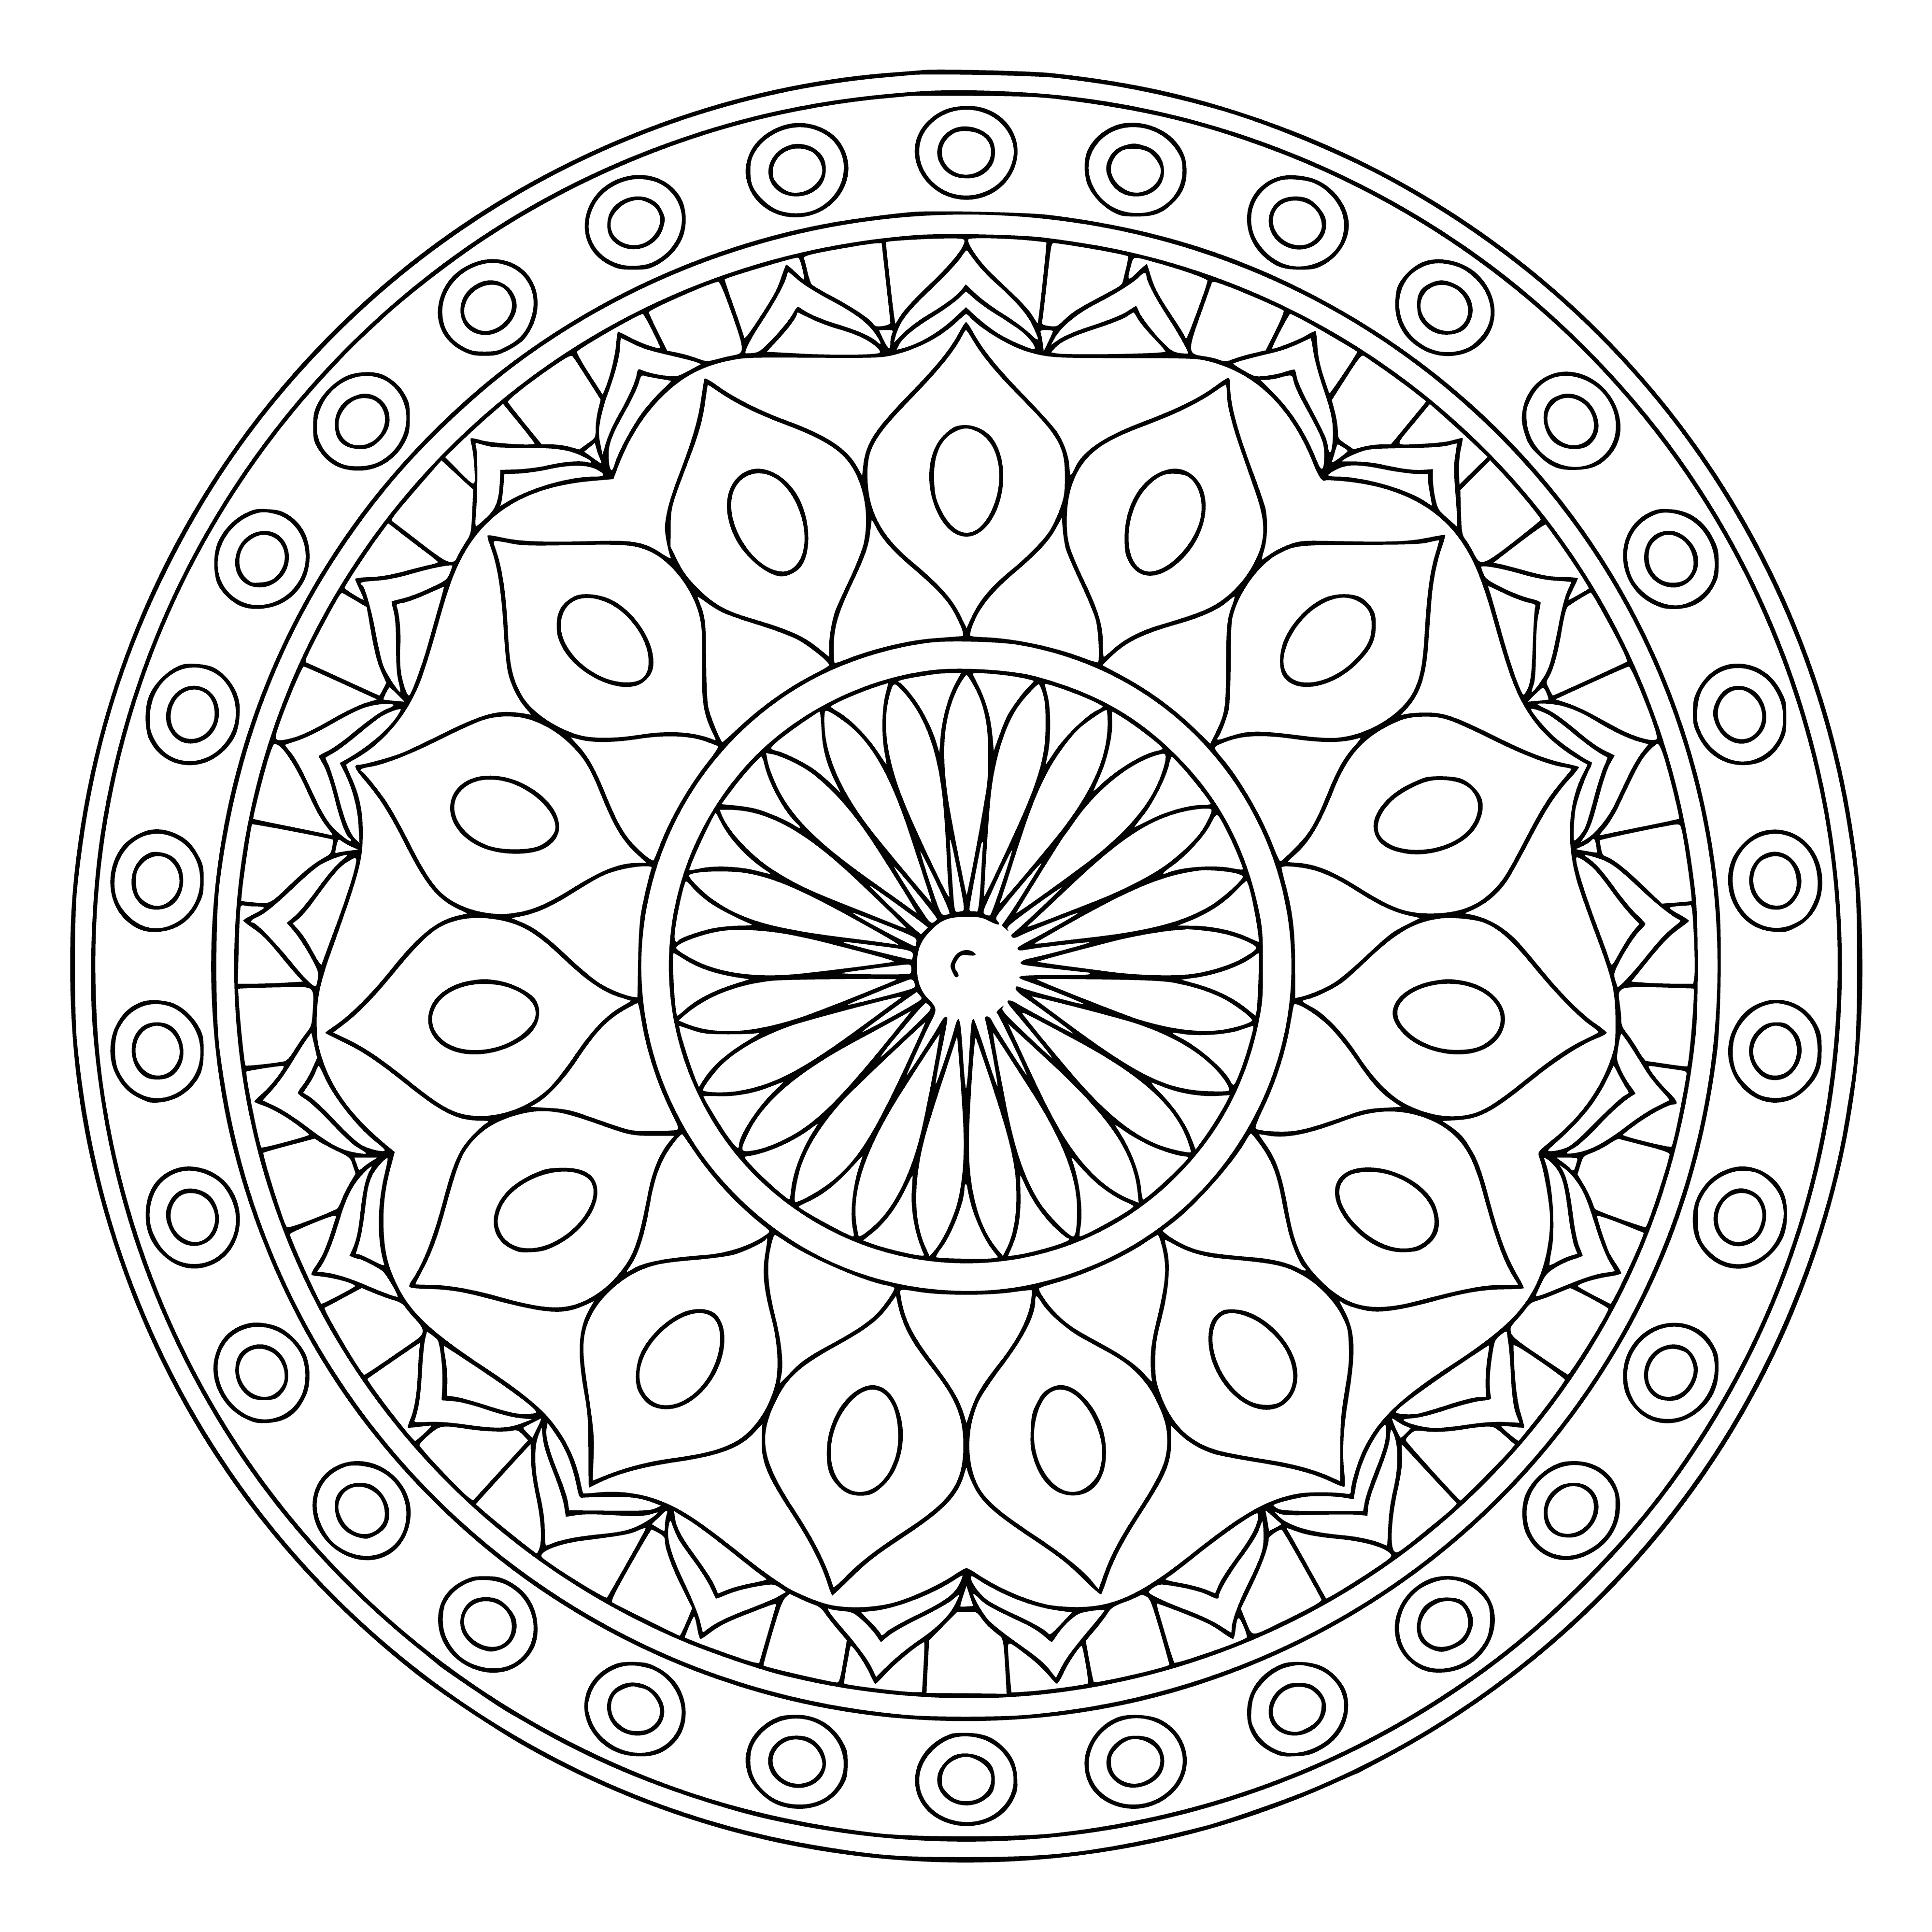 Flower mandala coloring page